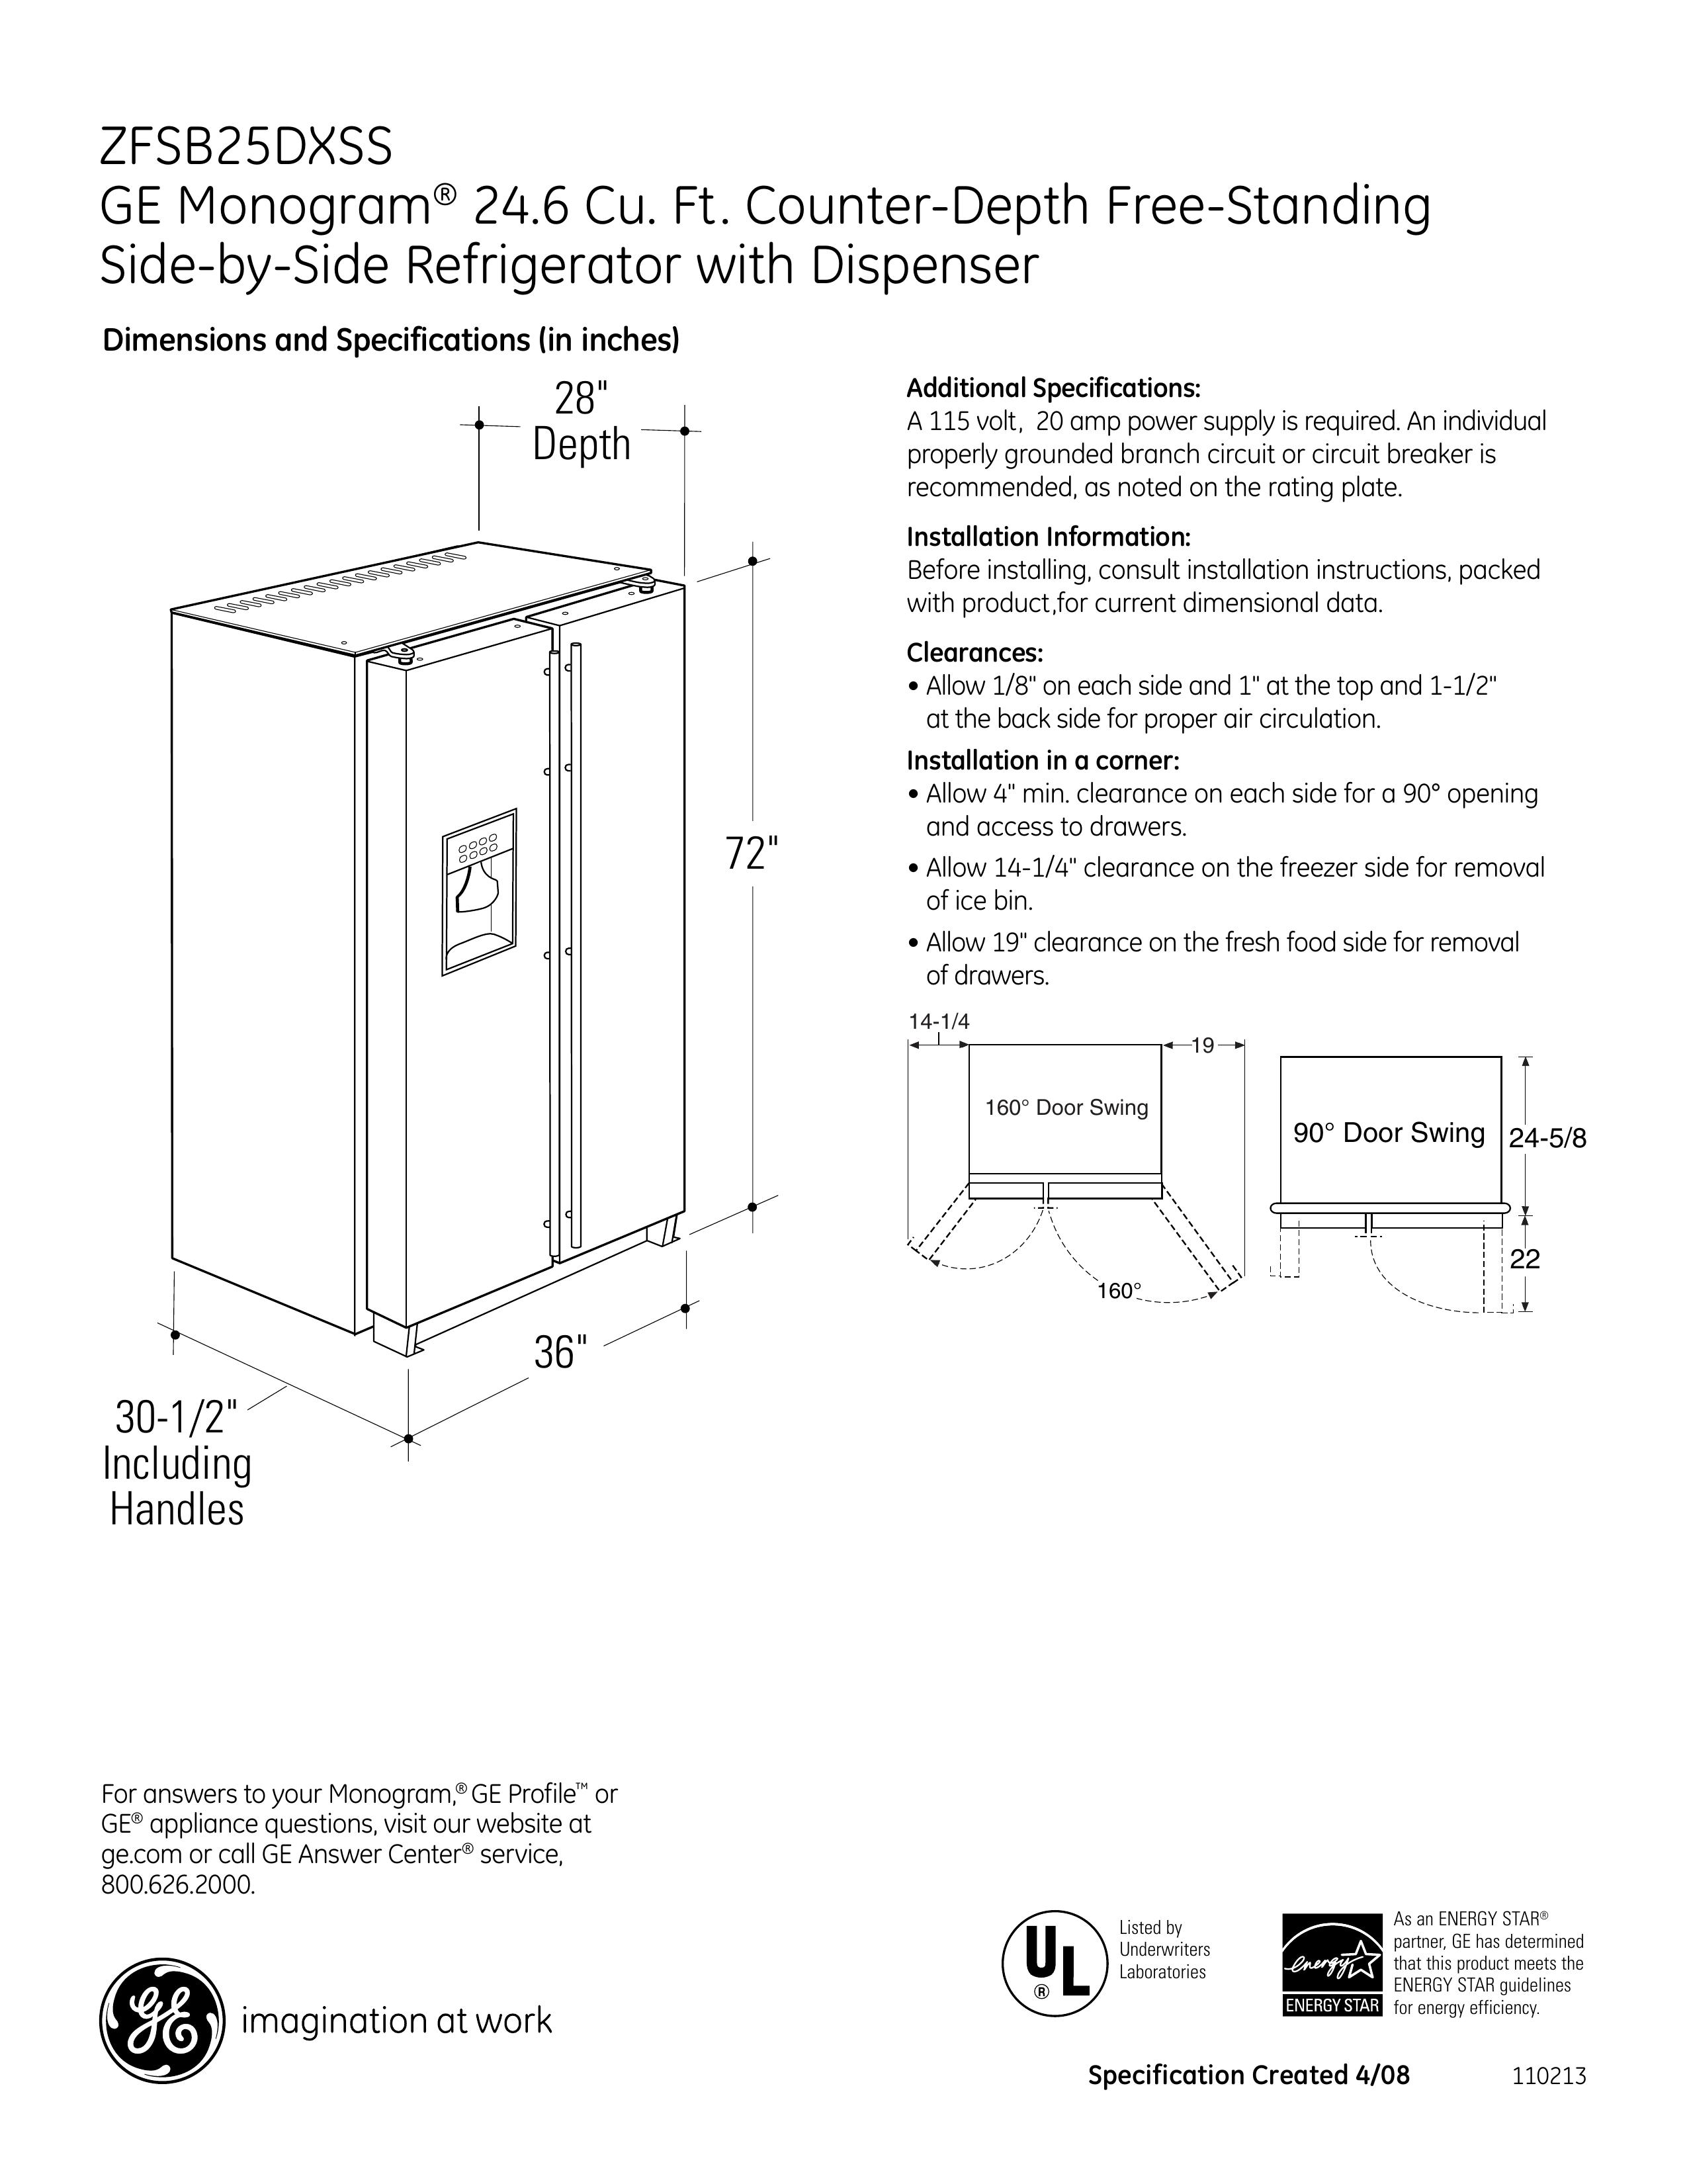 GE Monogram ZFSB25DXSS Refrigerator User Manual